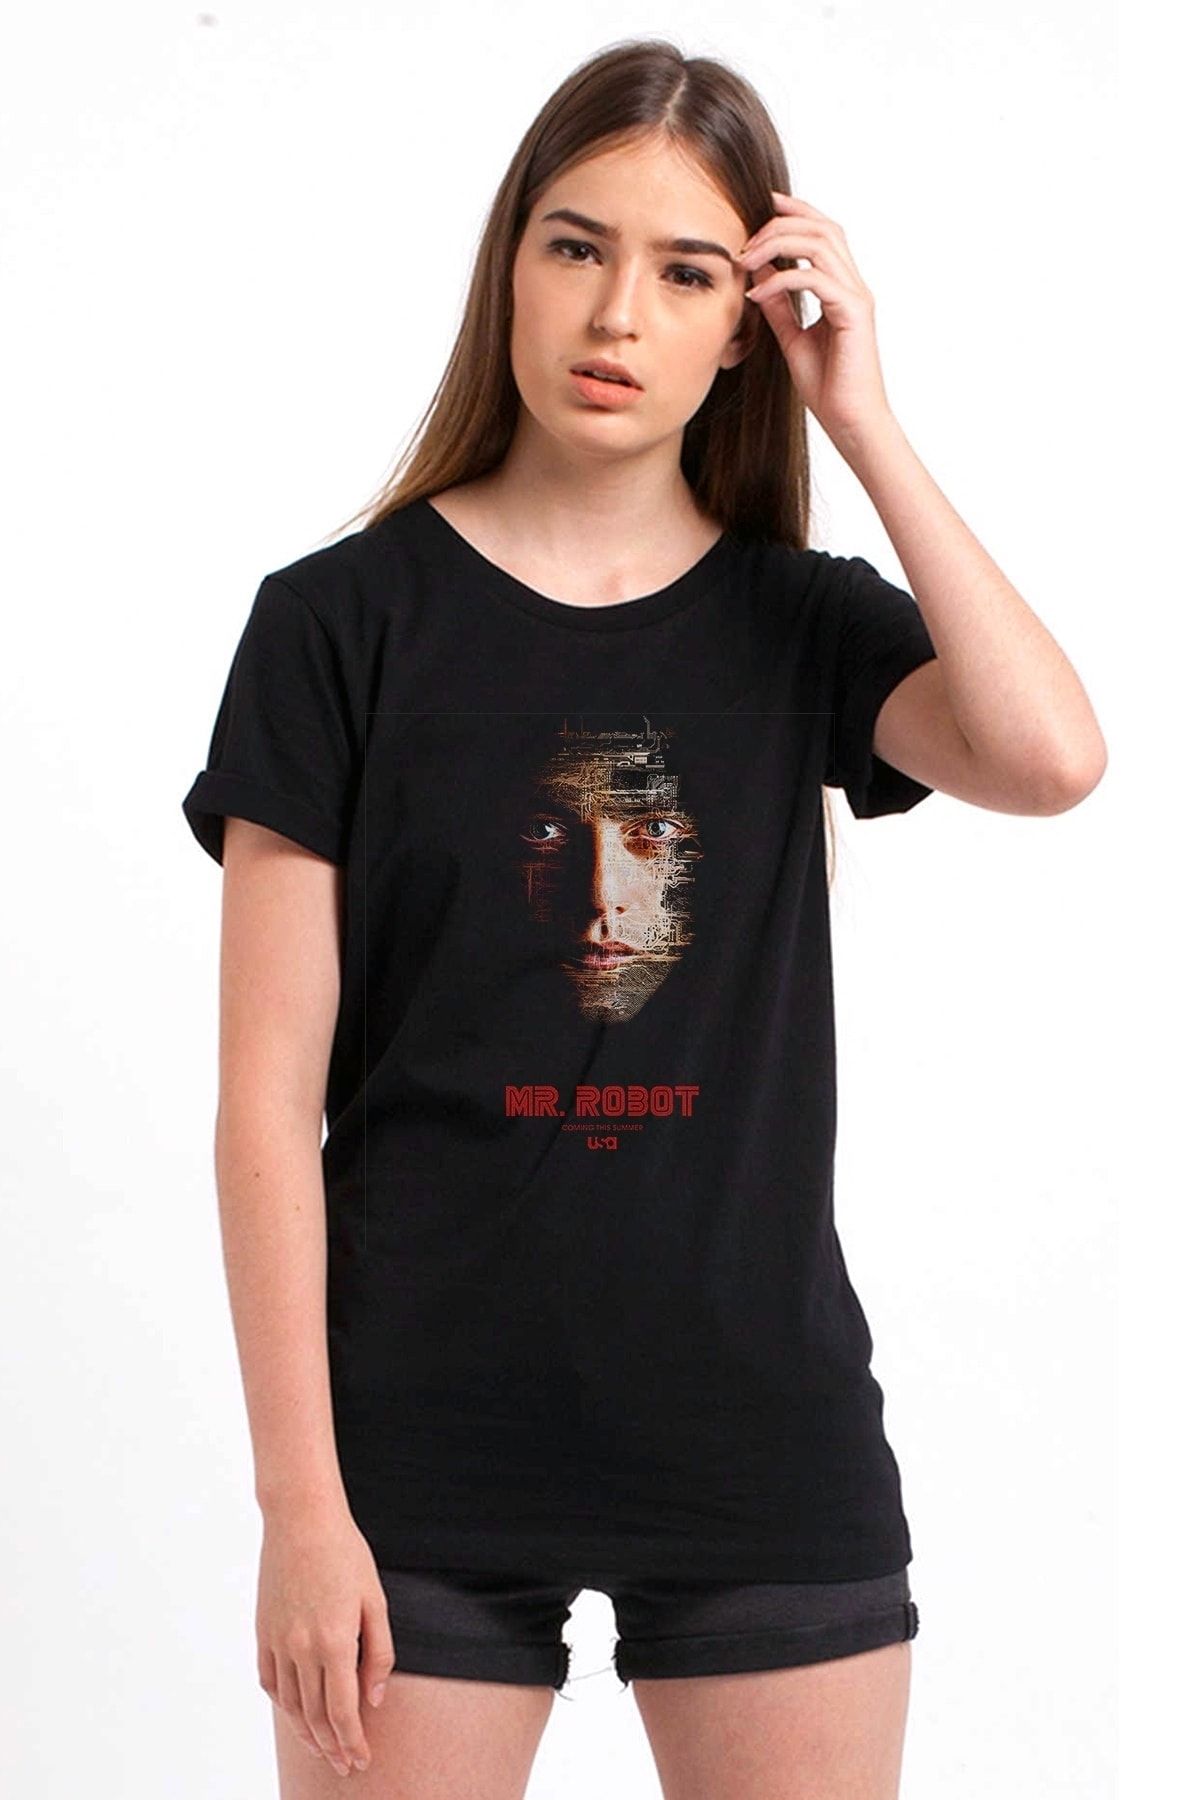 QIVI Mr Robot Baskılı Siyah Kadın Örme Tshirt T-shirt Tişört T Shirt